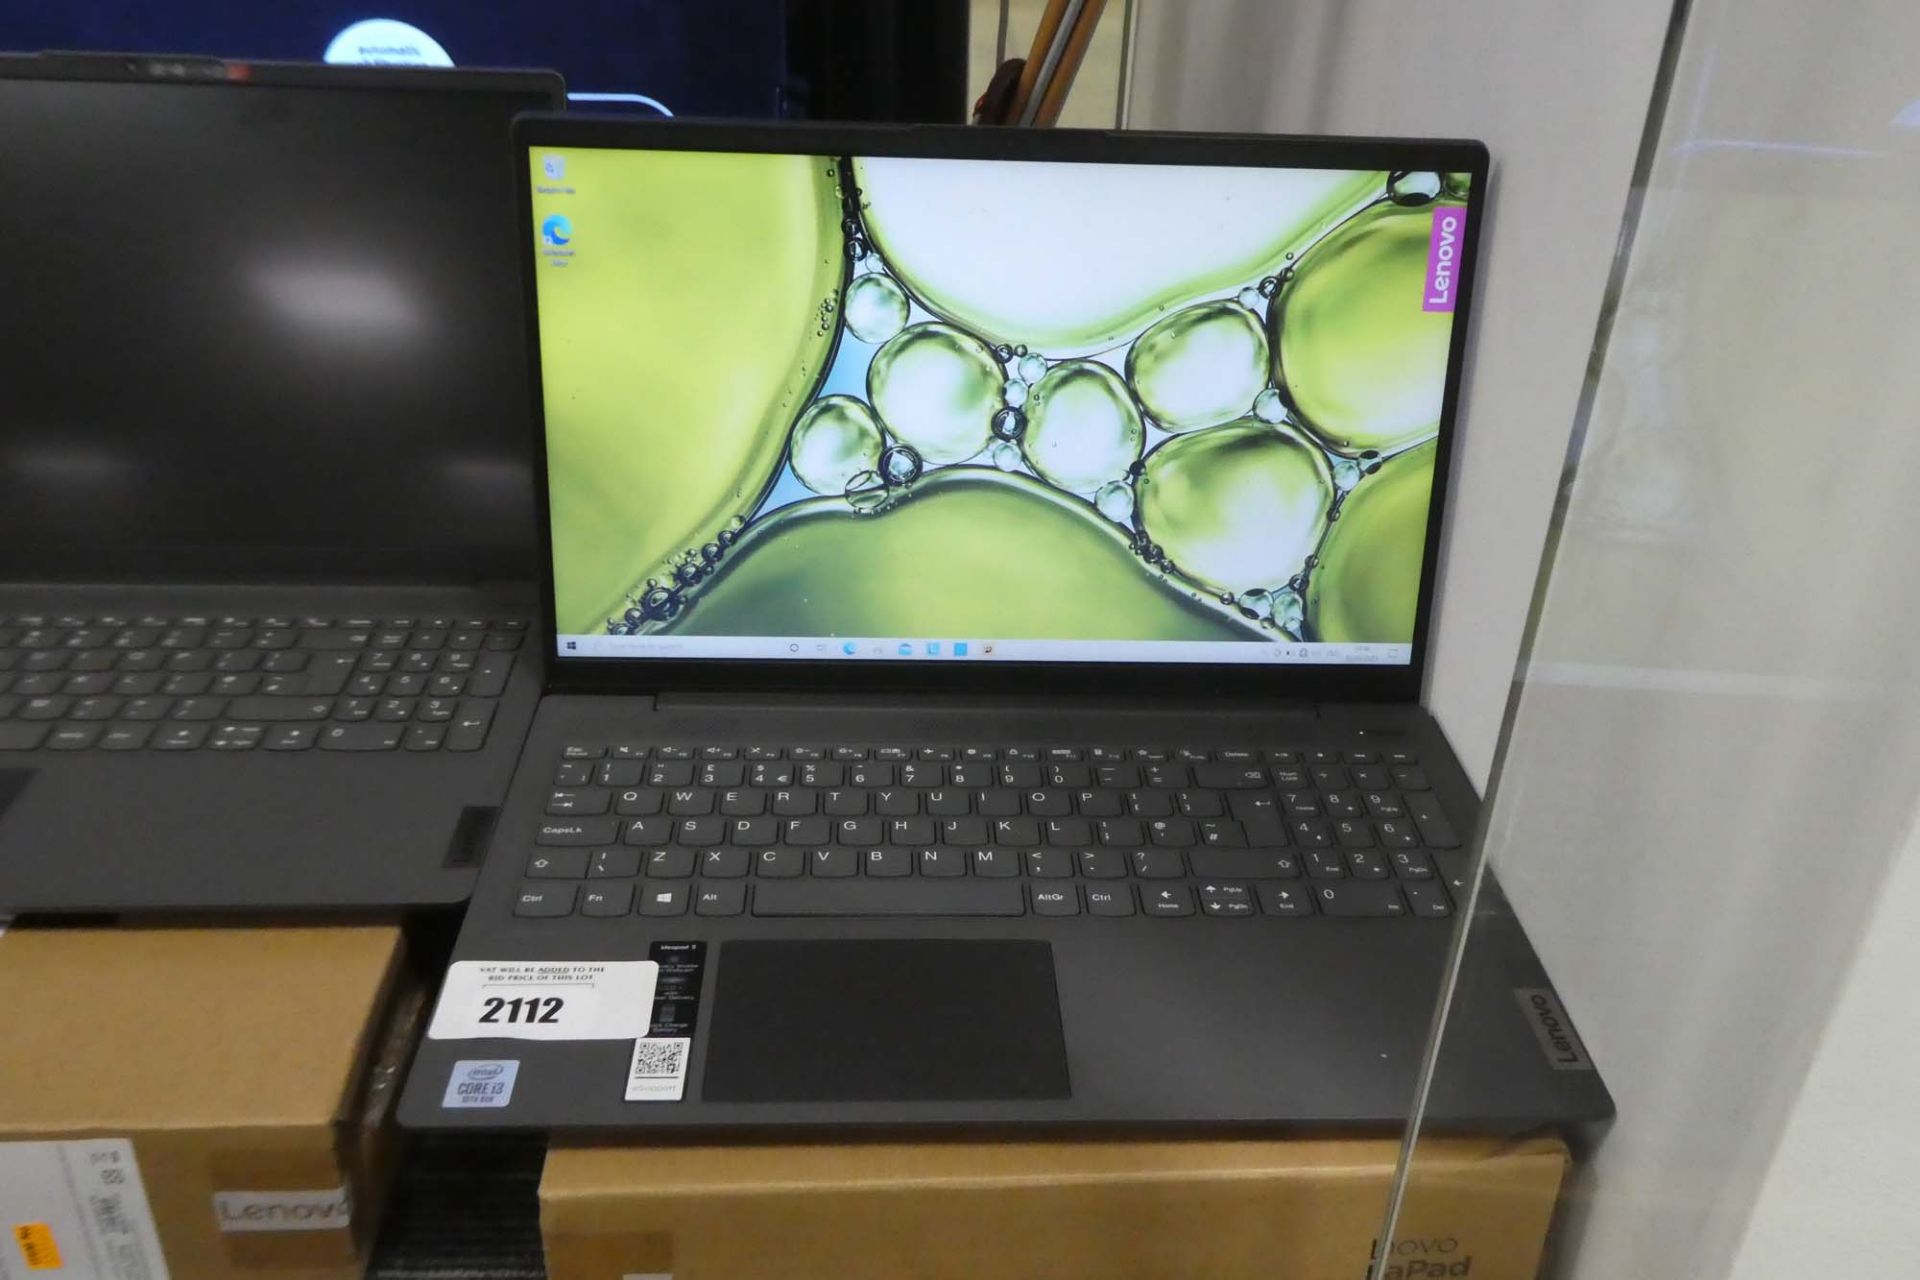 Lenovo Ideapad 5 laptop core i3 10th gen processor, 8gb ram, 128gb storage with WIndows 10